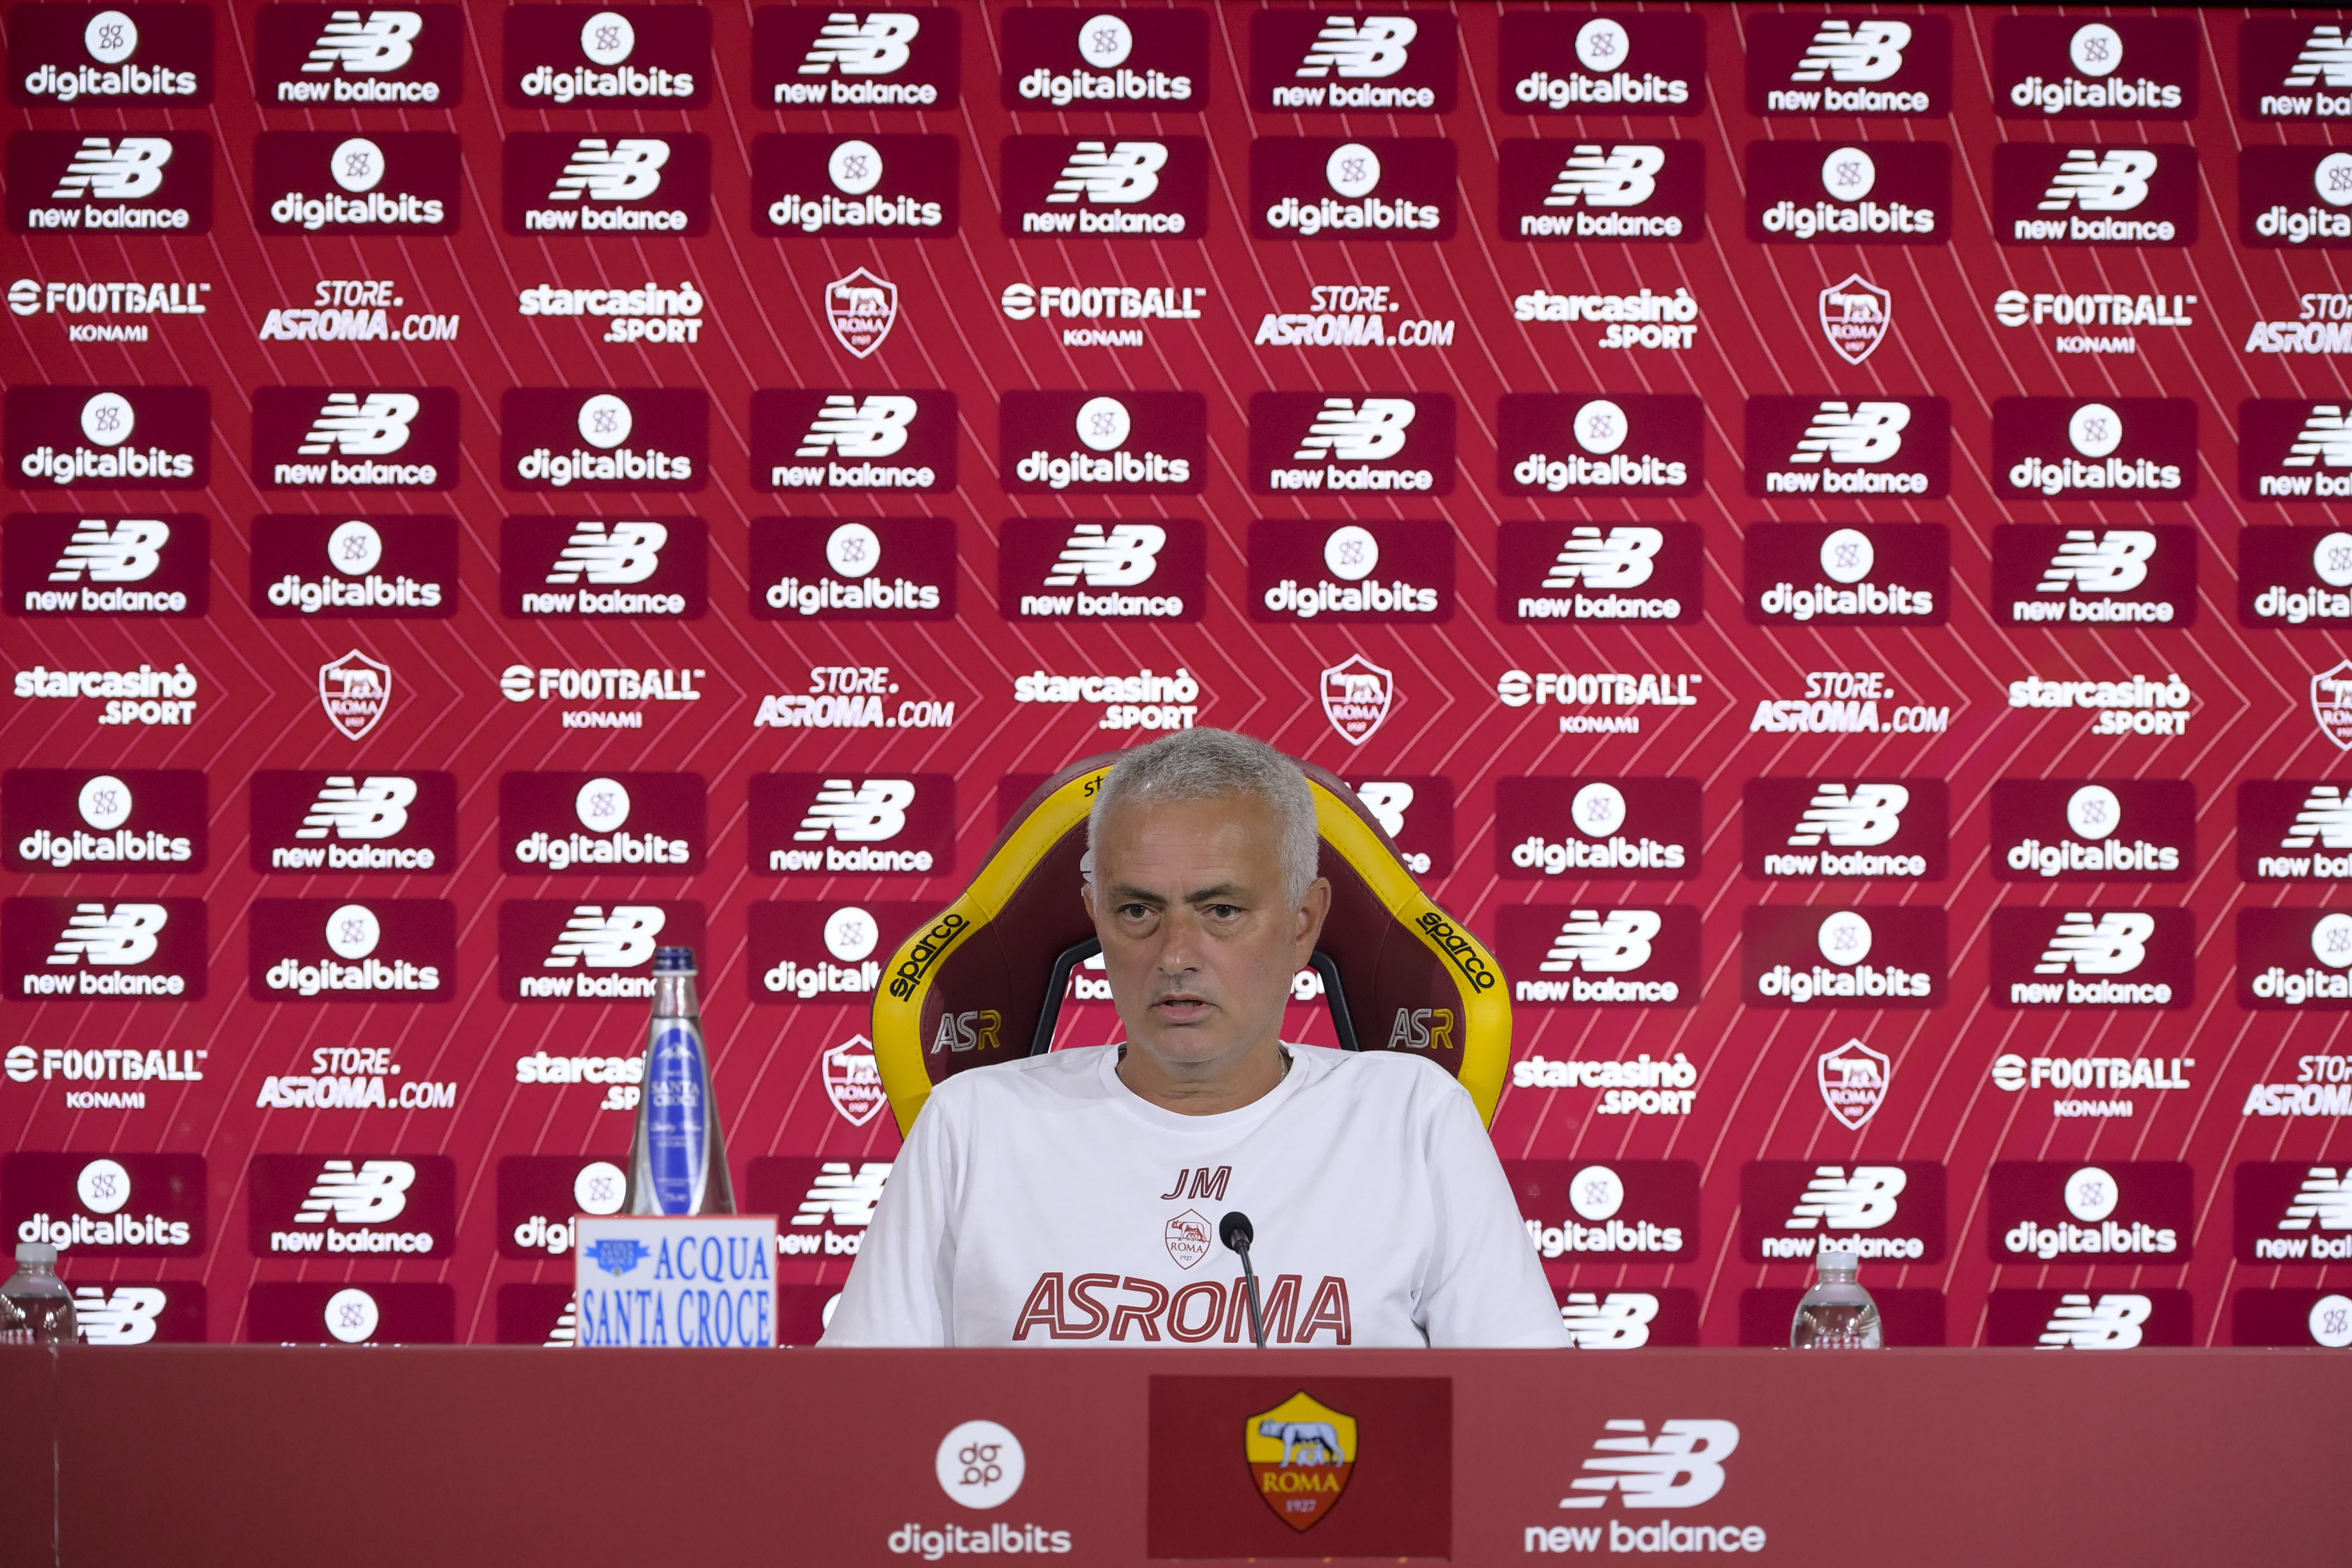 Mourinho in conferenza stampa